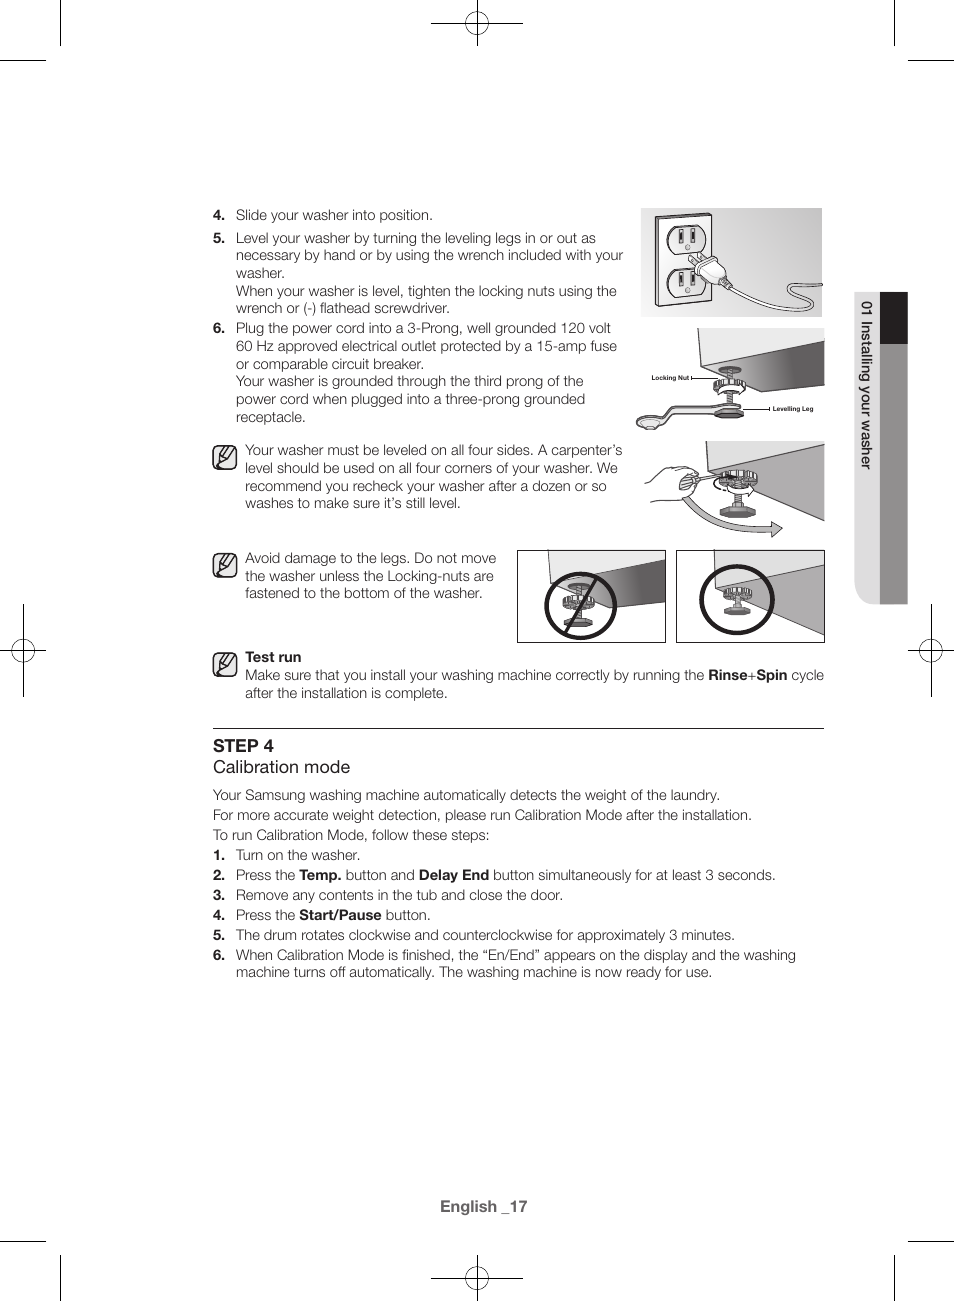 Step 4 calibration mode | Samsung WF42H5000AW-A2 User Manual | Page 17